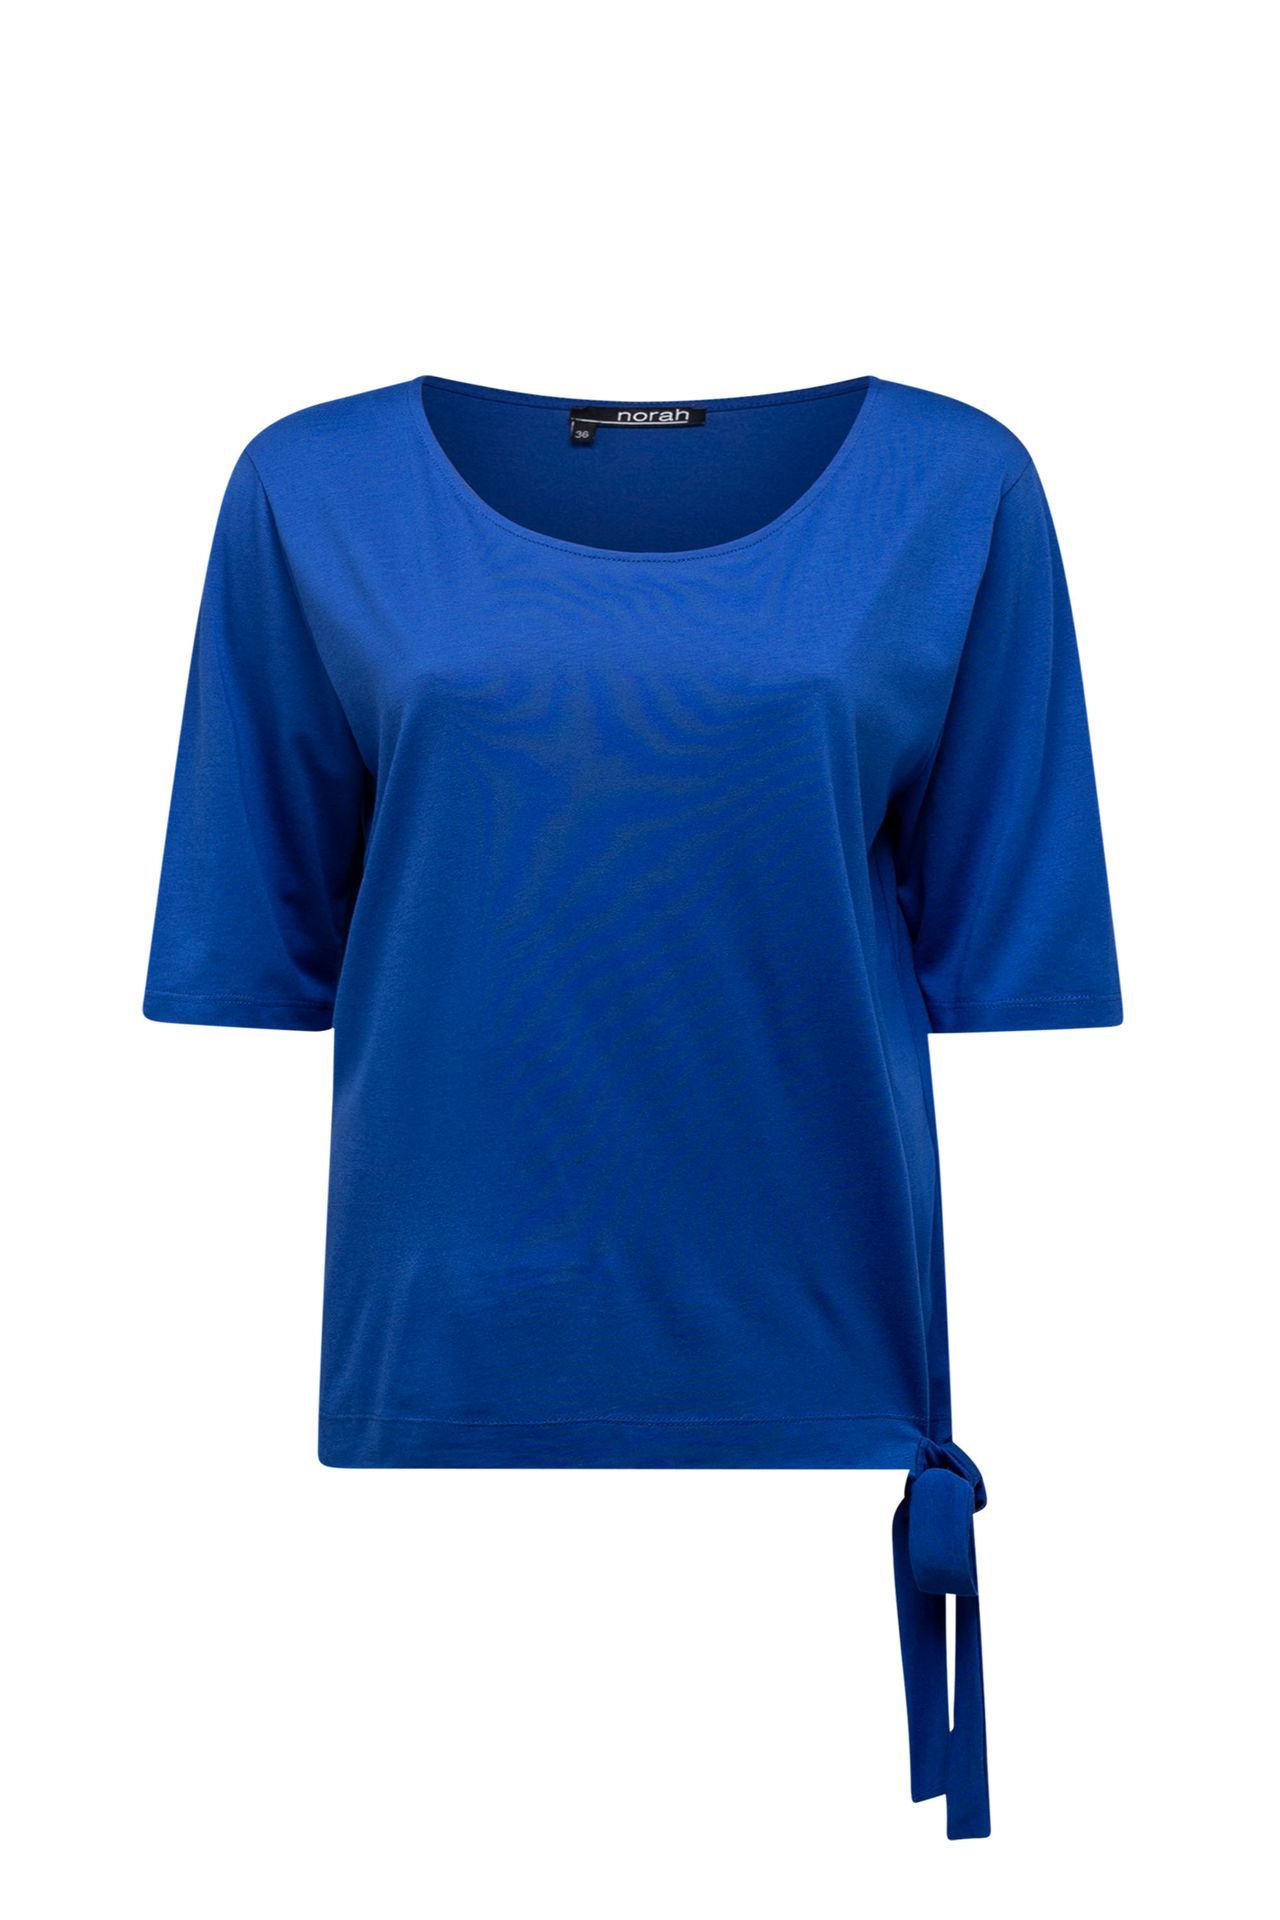 Norah Kobaltblauw shirt met strik cobalt 209993-468